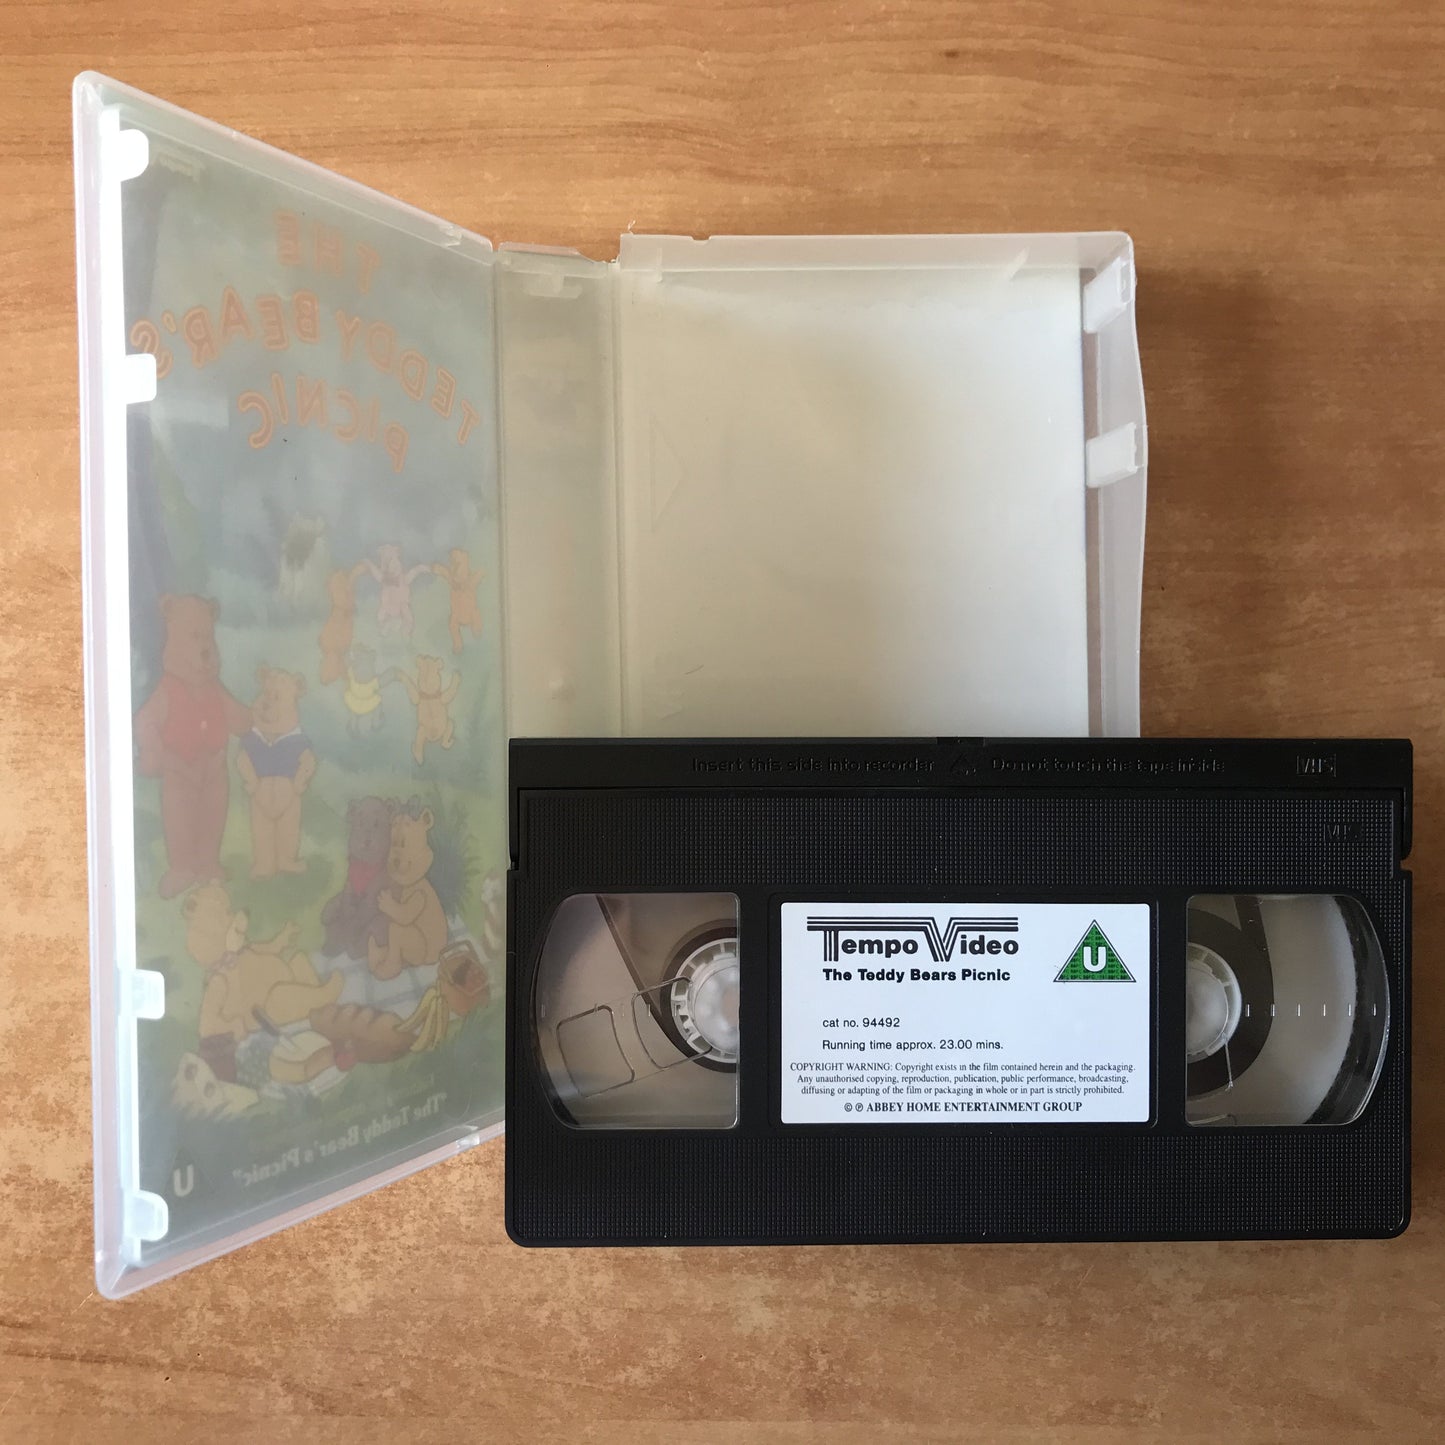 Teddy Bear’s Picnic: Original Recording - 1989 Lacewood - Tempo Kids - VHS-